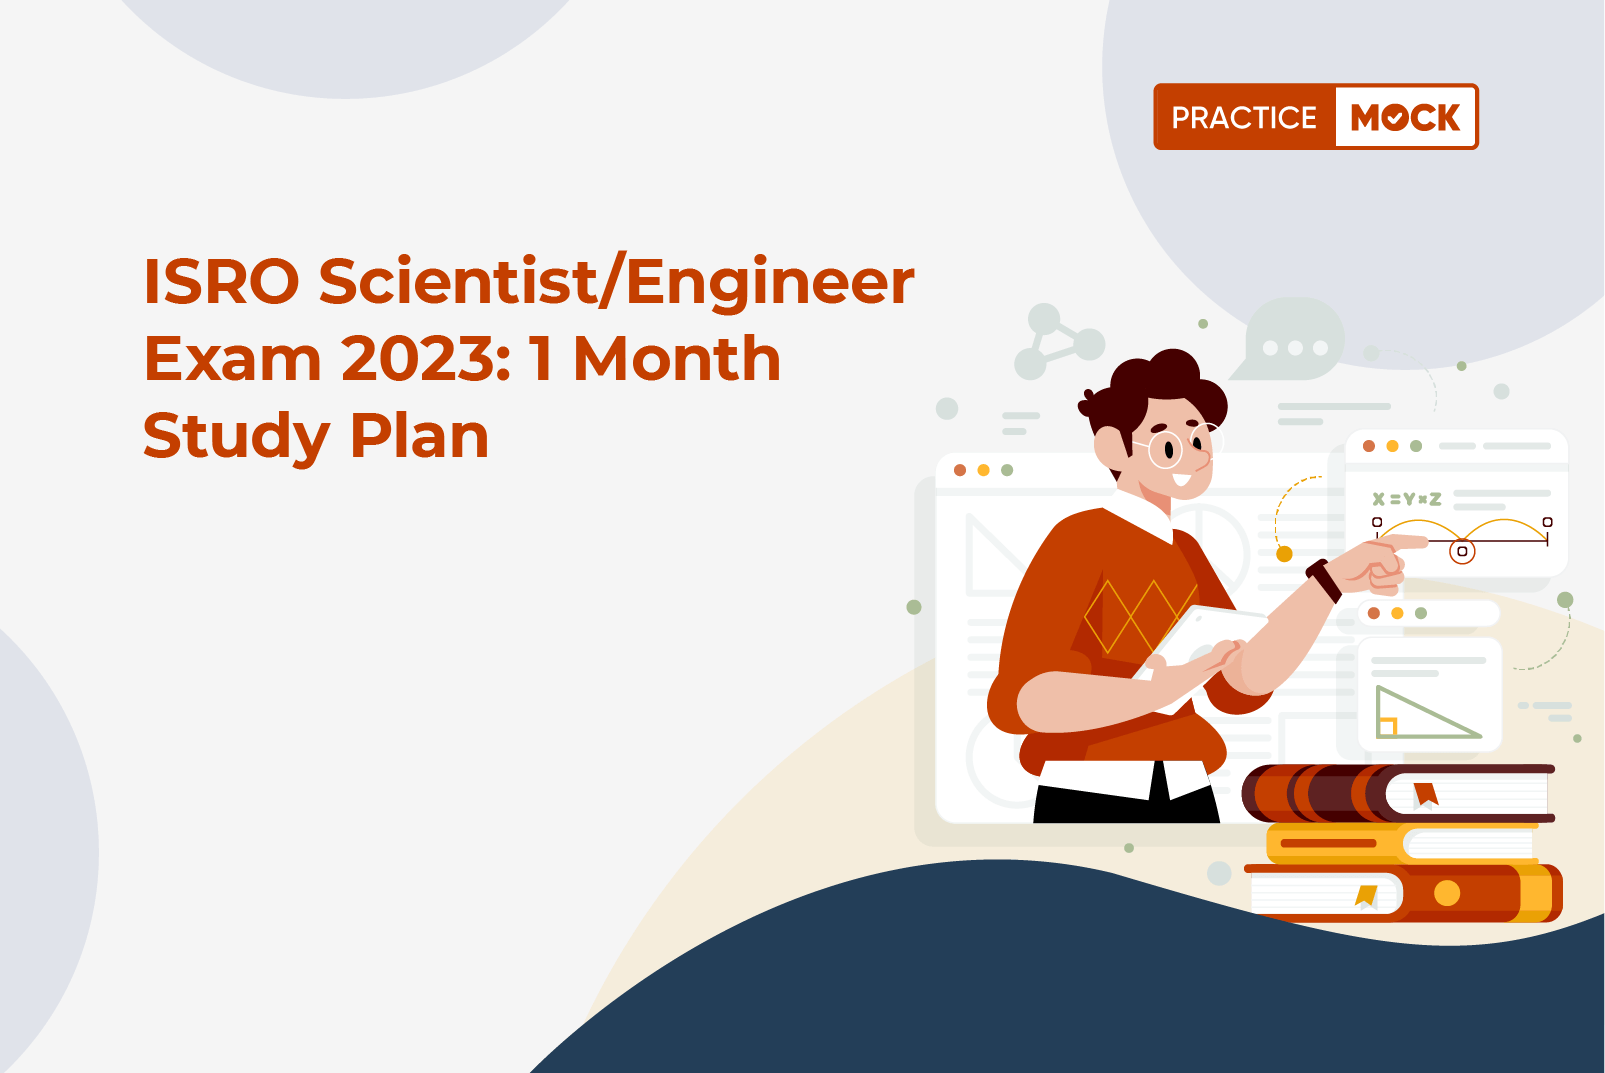 ISRO Scientist/Engineer Exam 2023: 1 Month Study Plan